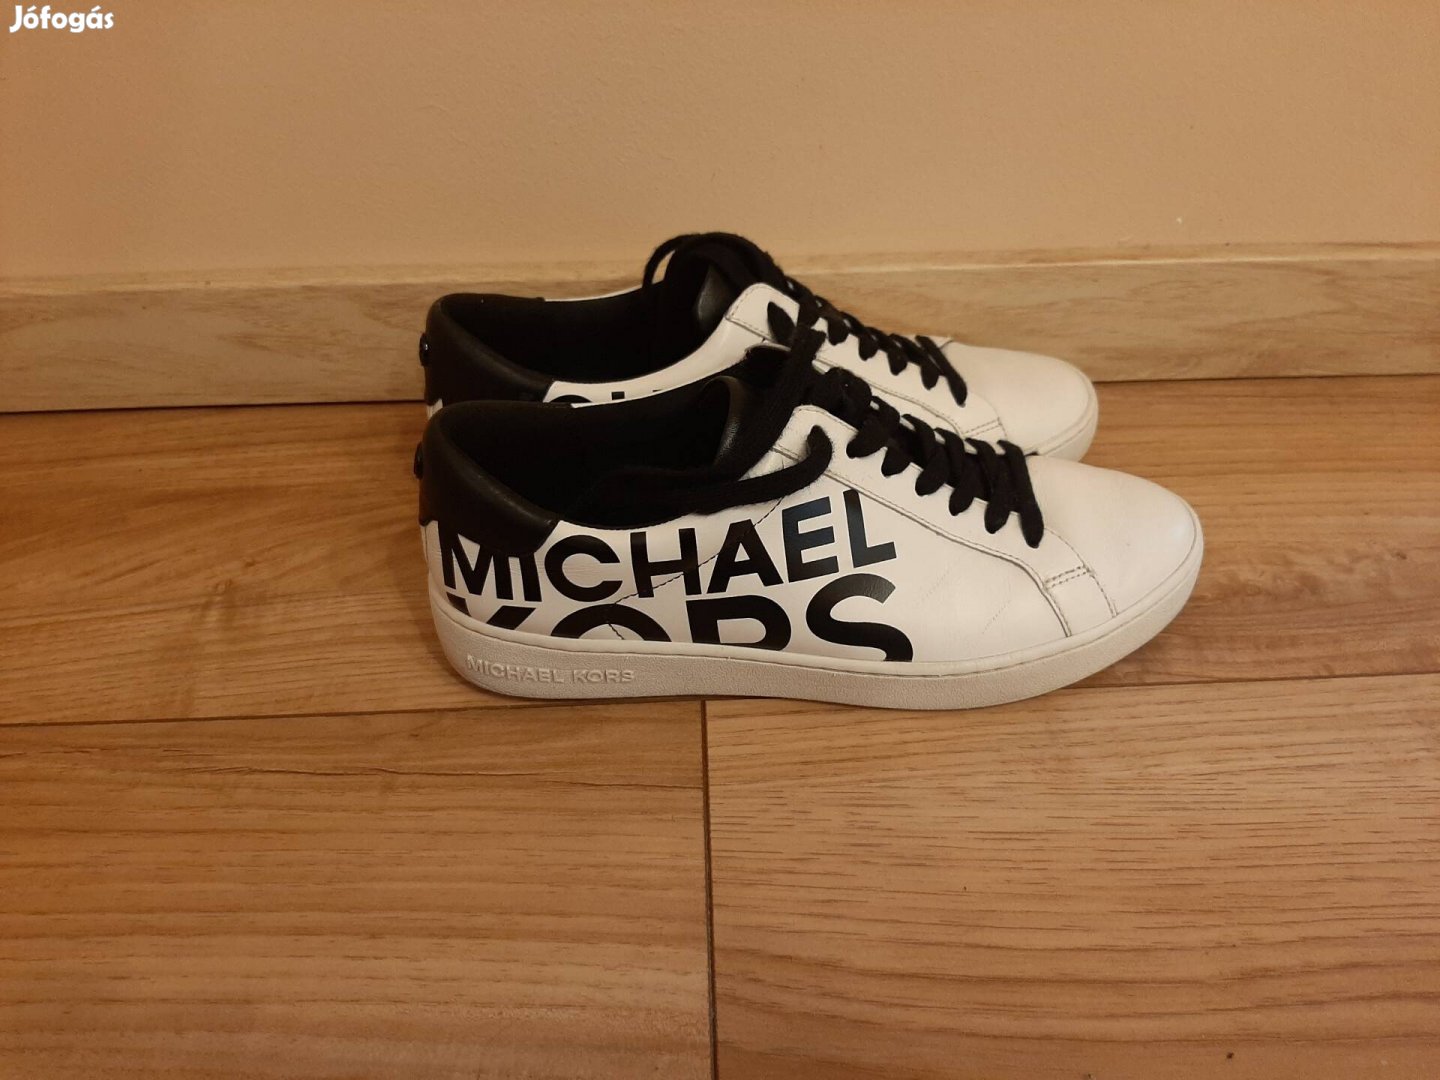 Michael Kors cipő 38-as